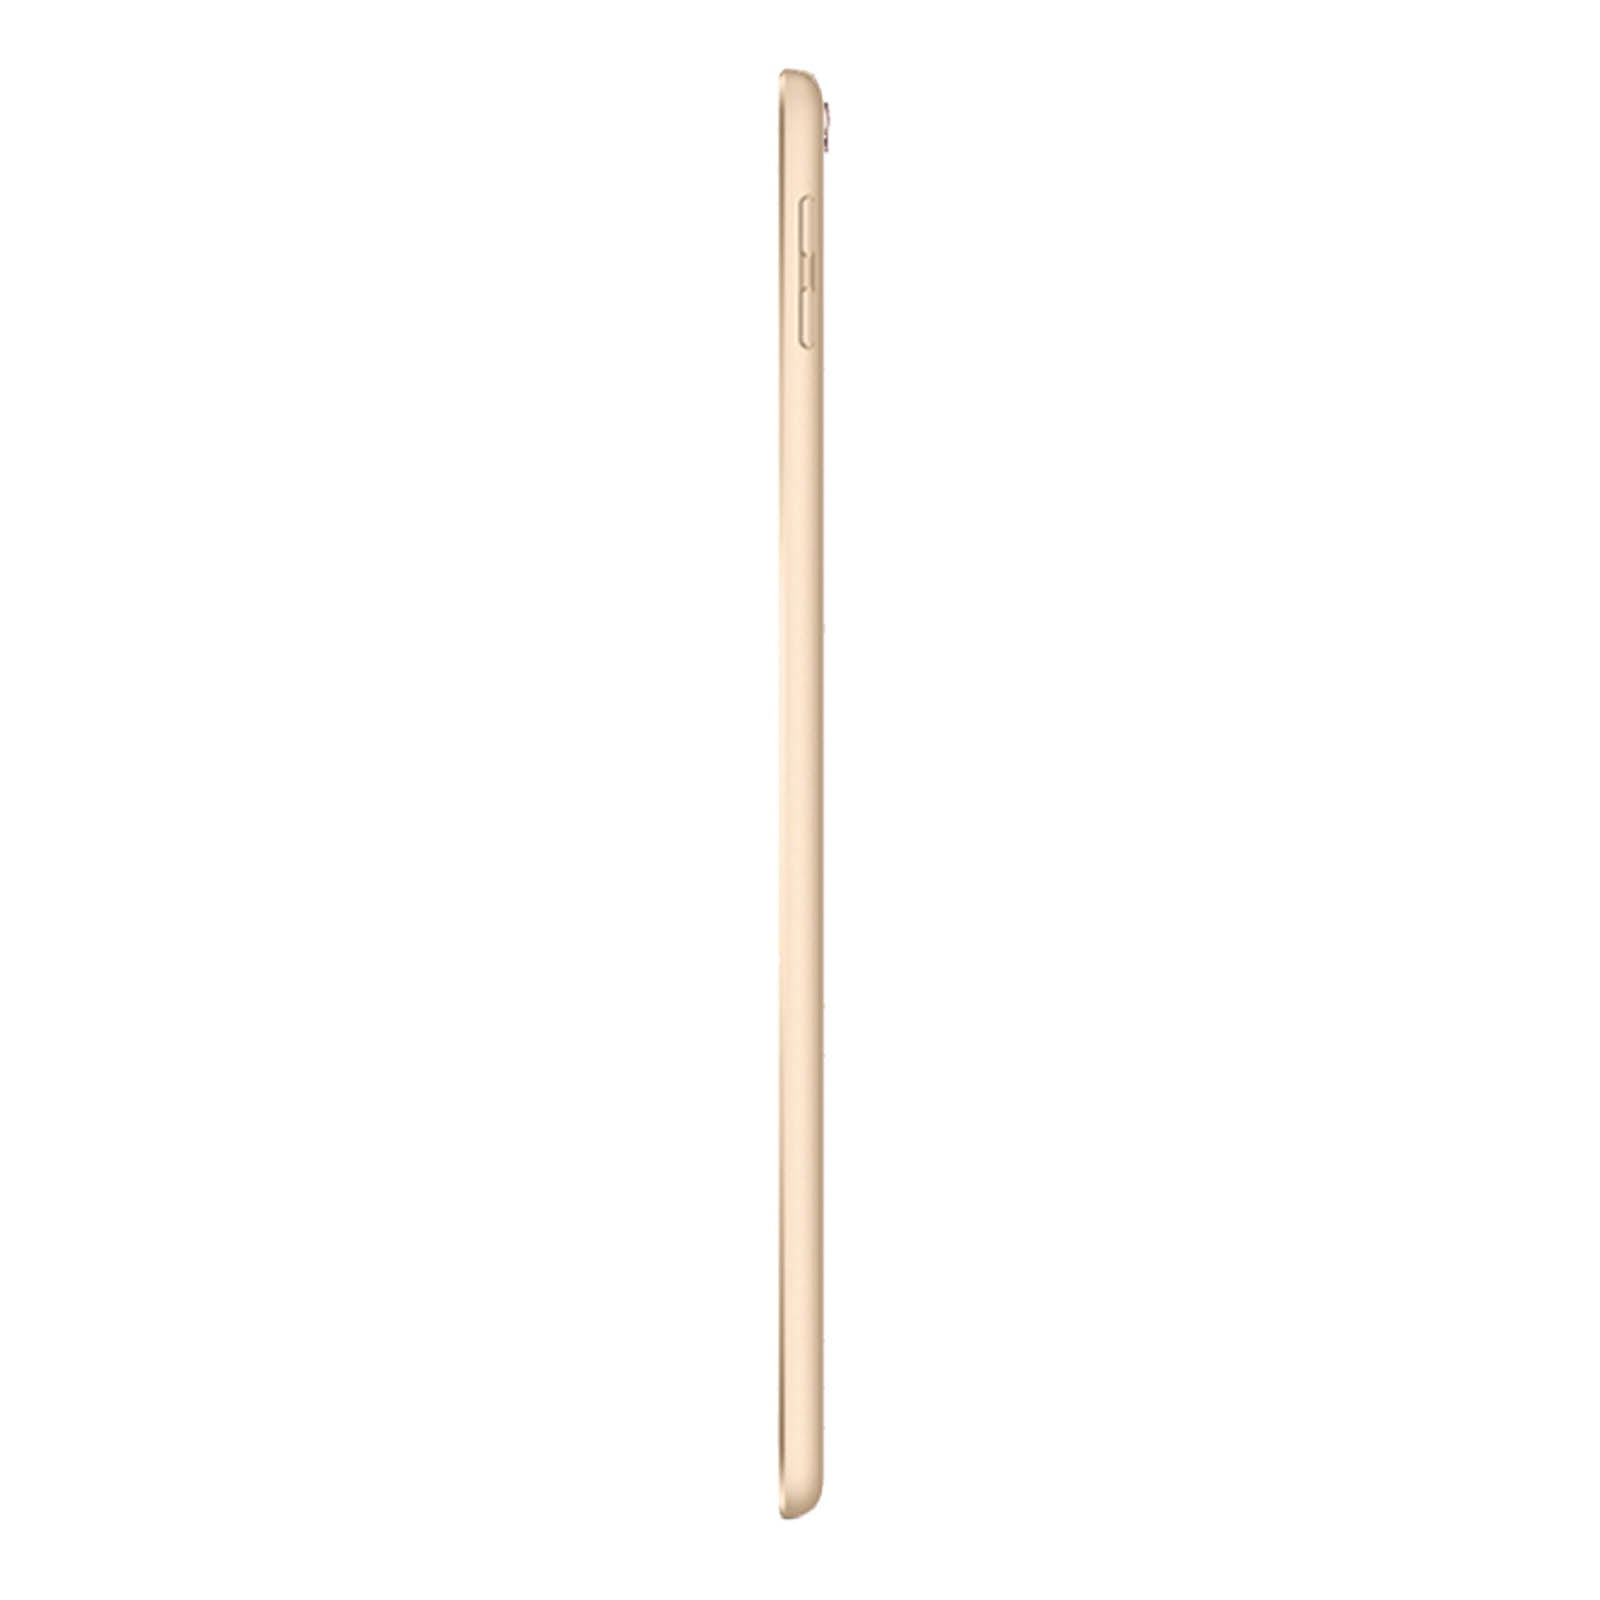 iPad Pro 10.5 Inch 256GB Gold Pristine - WiFi